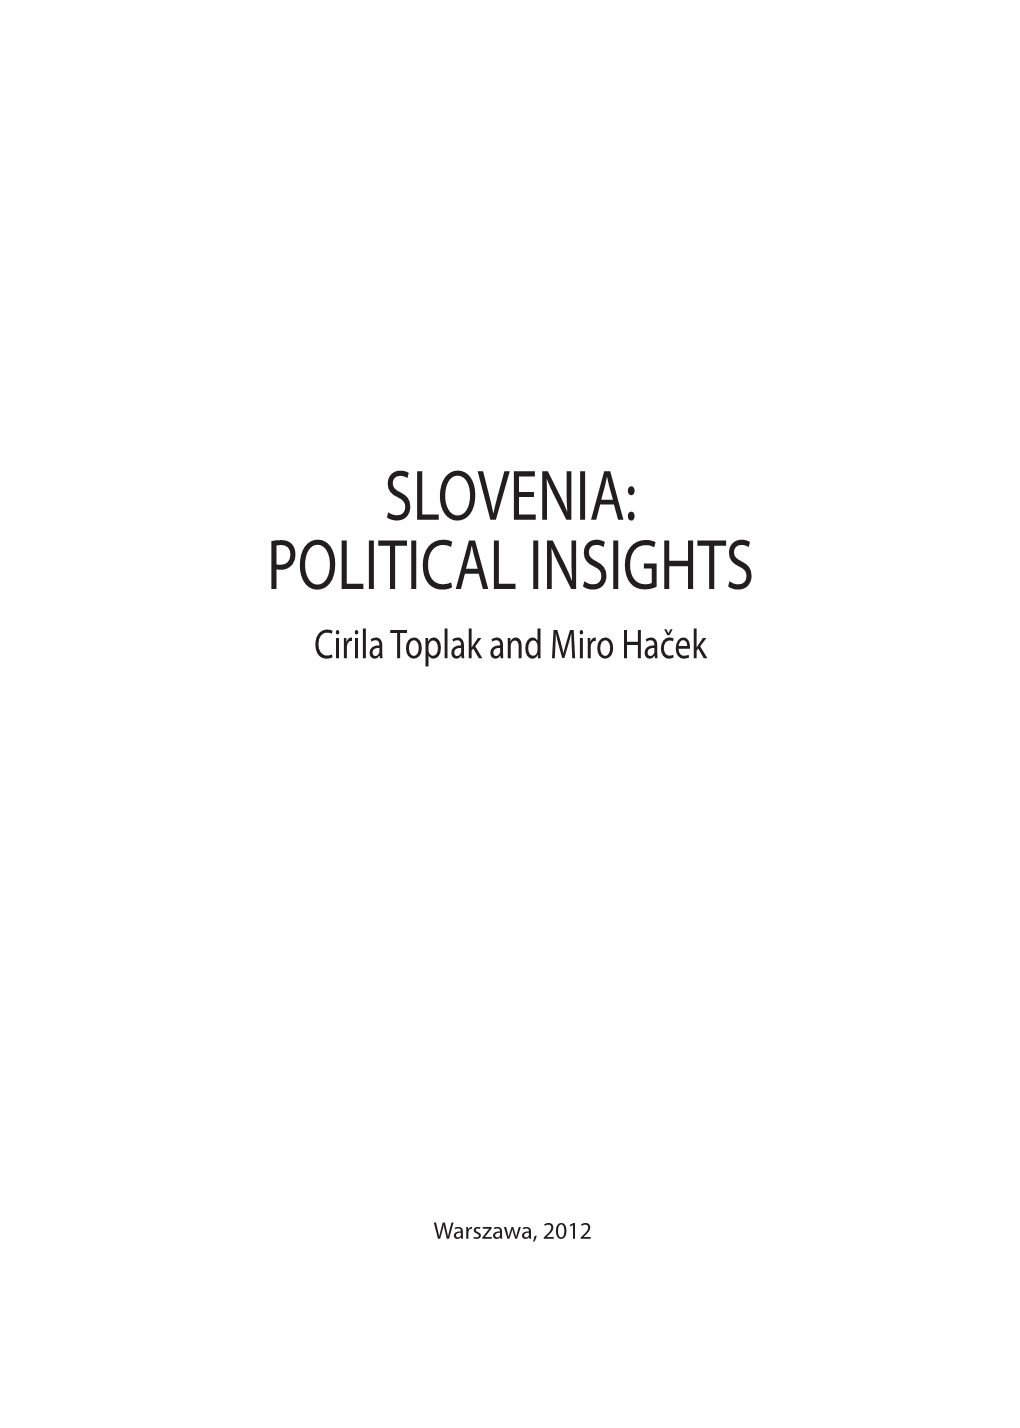 Slovenia: Political Insights